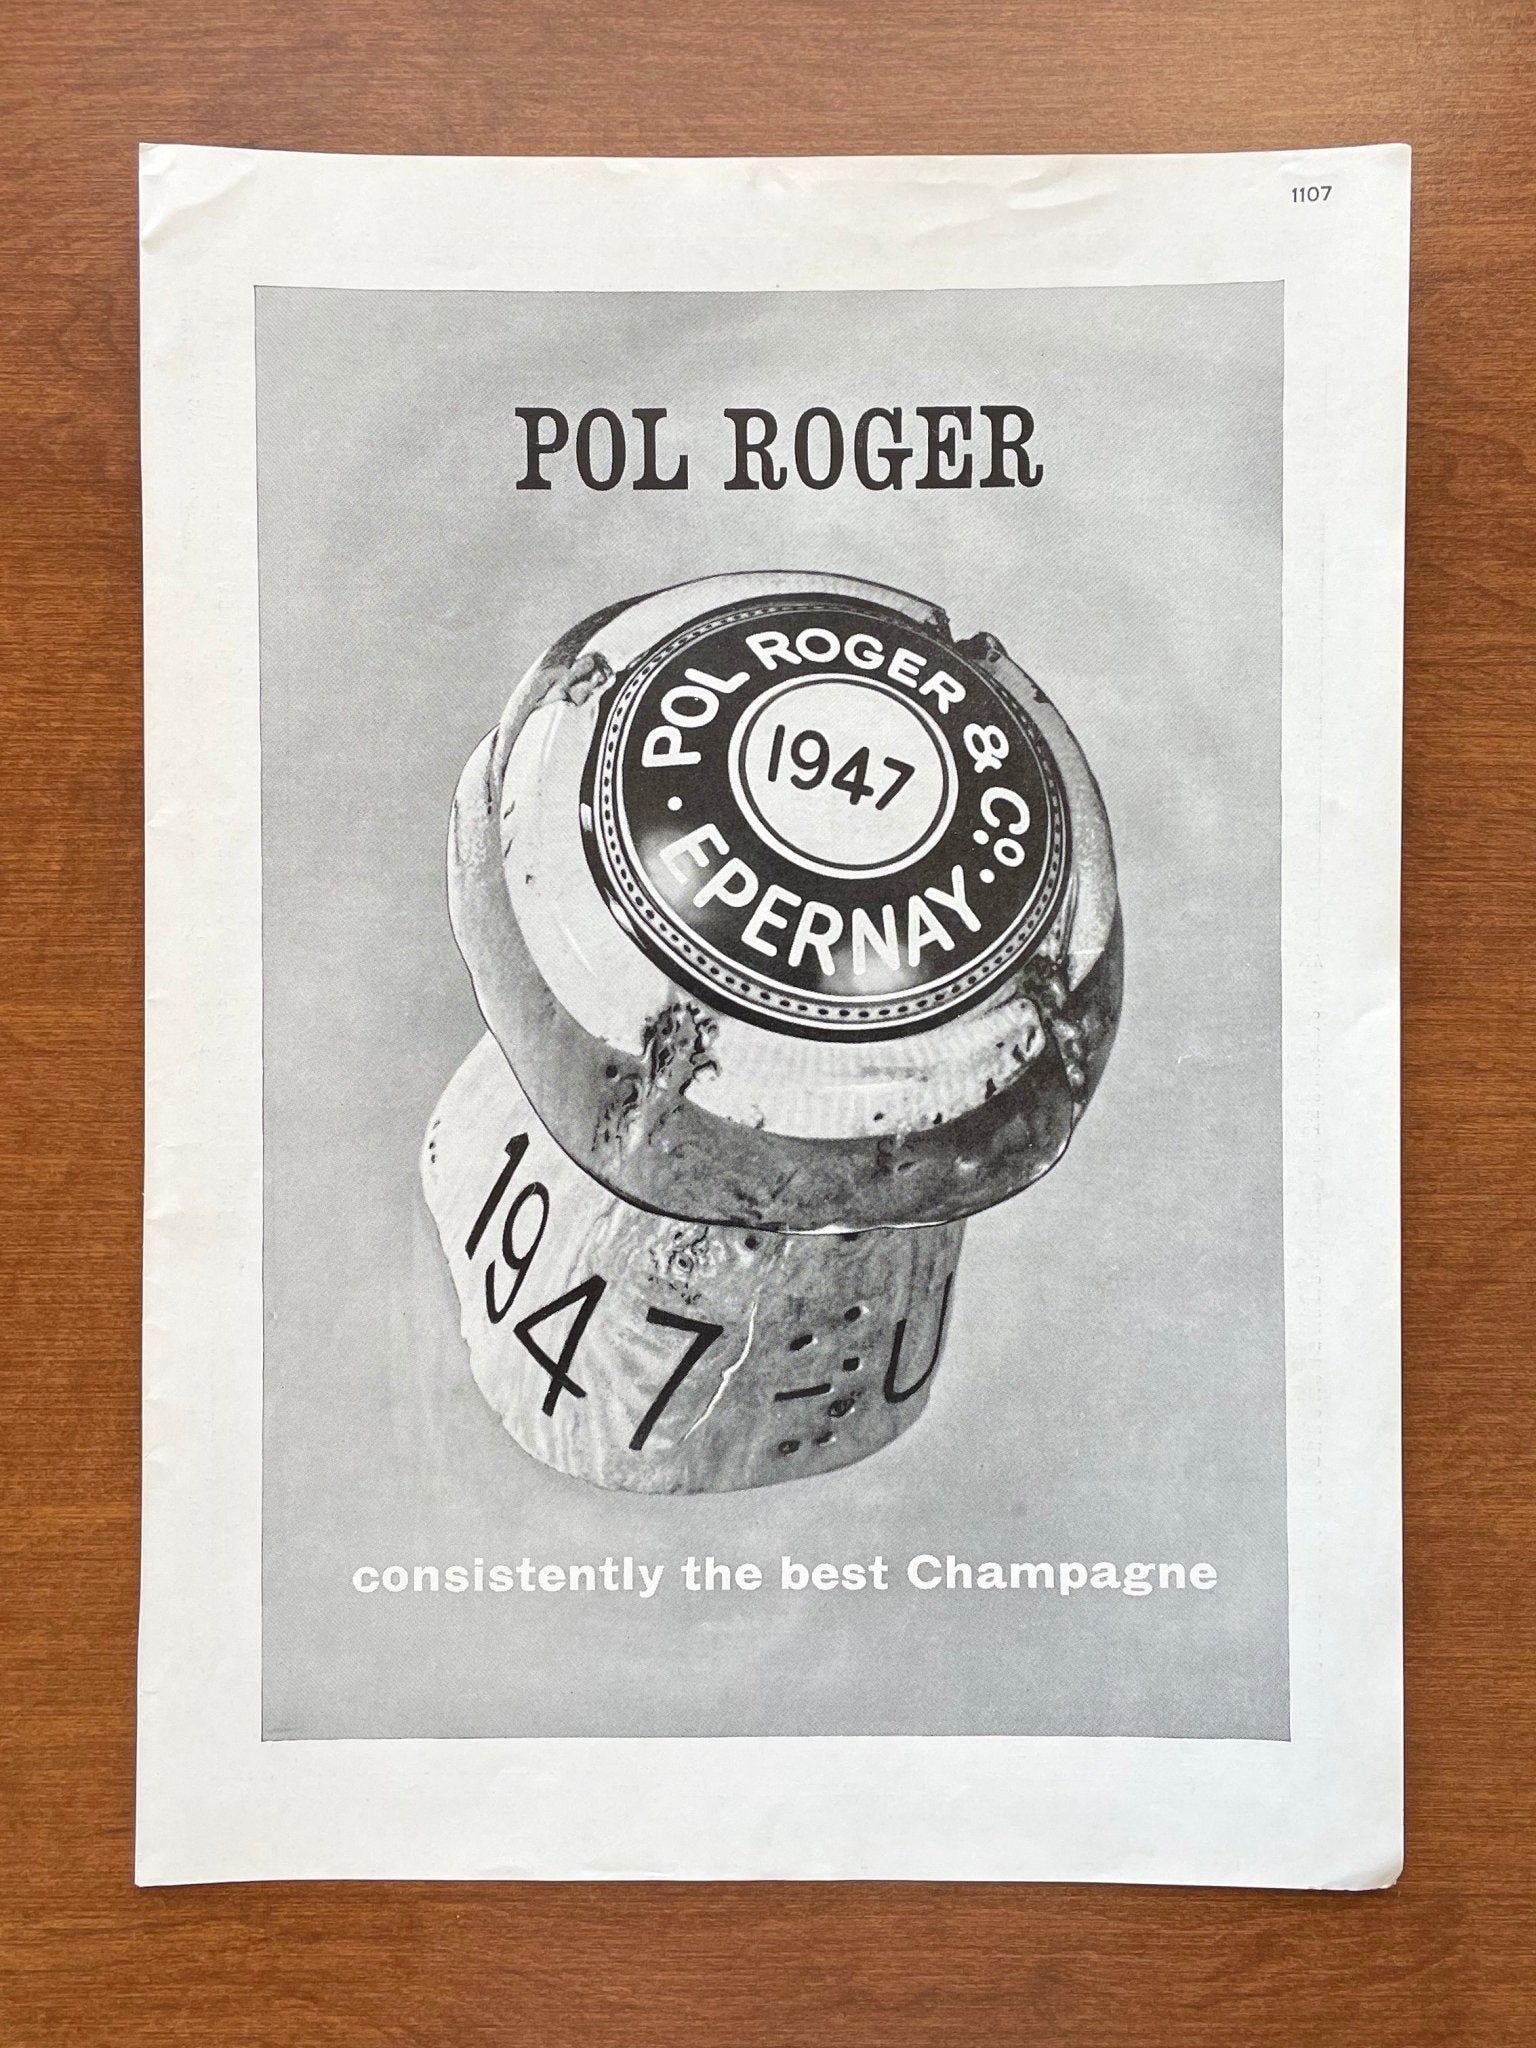 1957 Pol Roger "best Champange" Advertisement